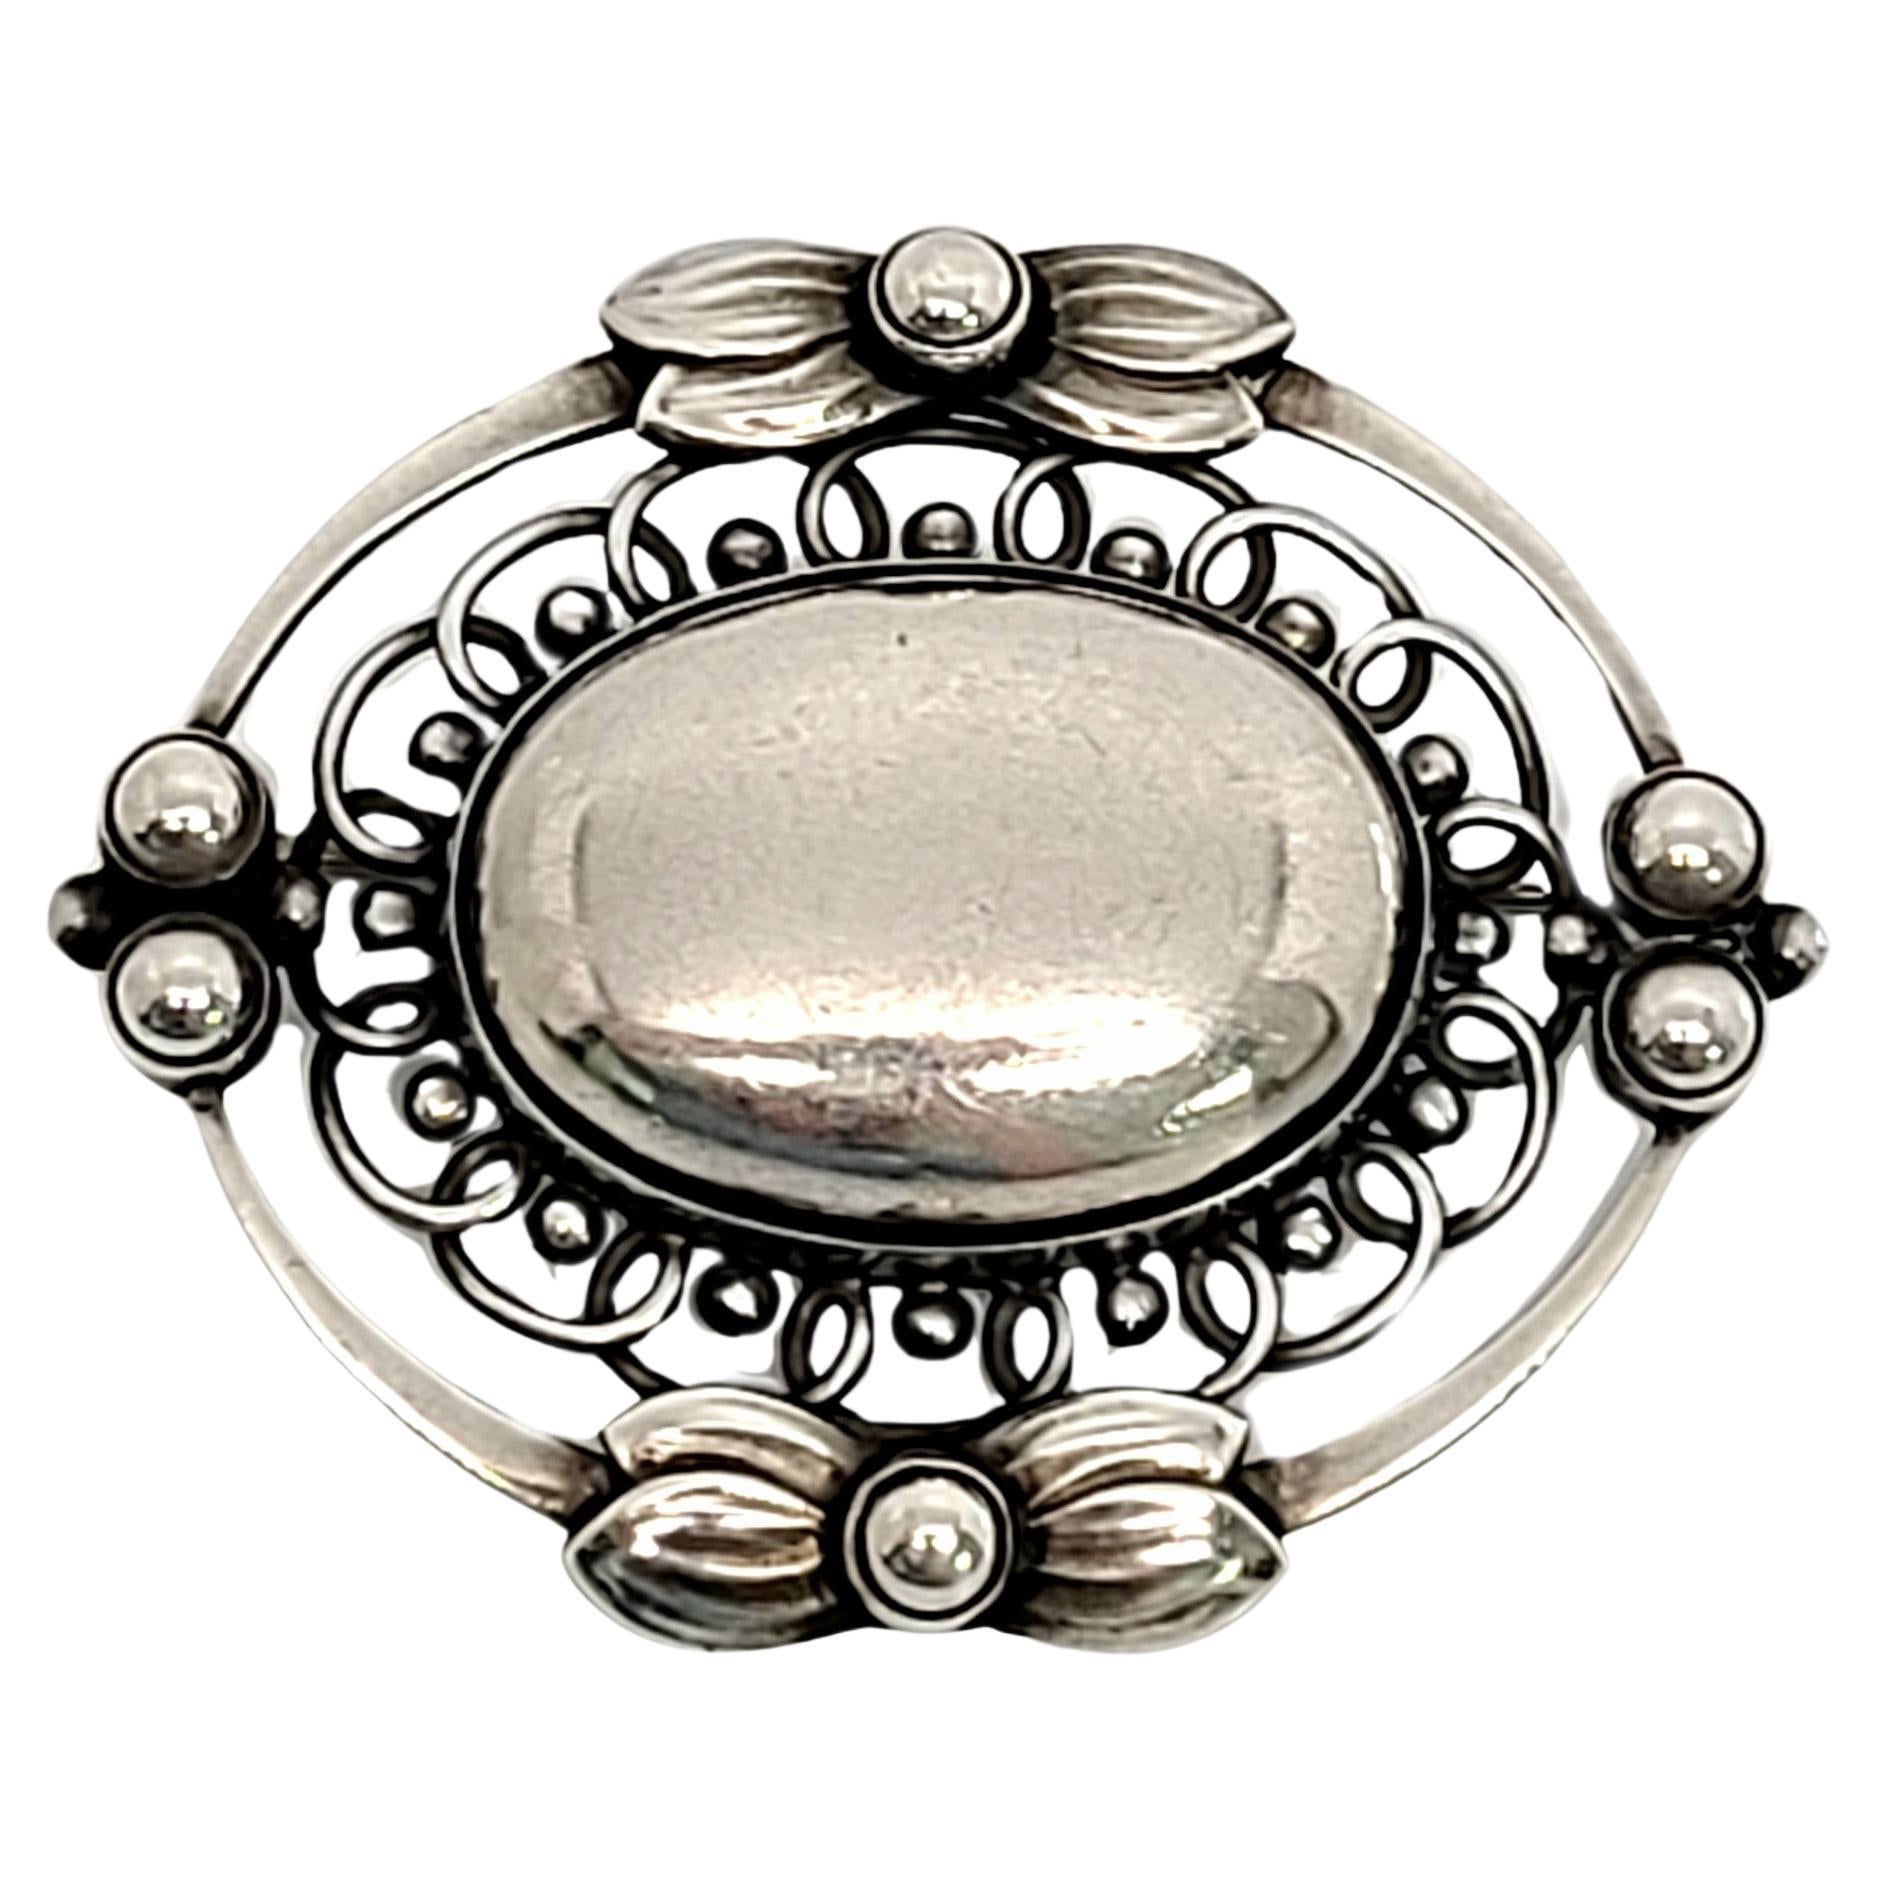 Georg Jensen Denmark #91 Sterling Silver Pin / Brooch